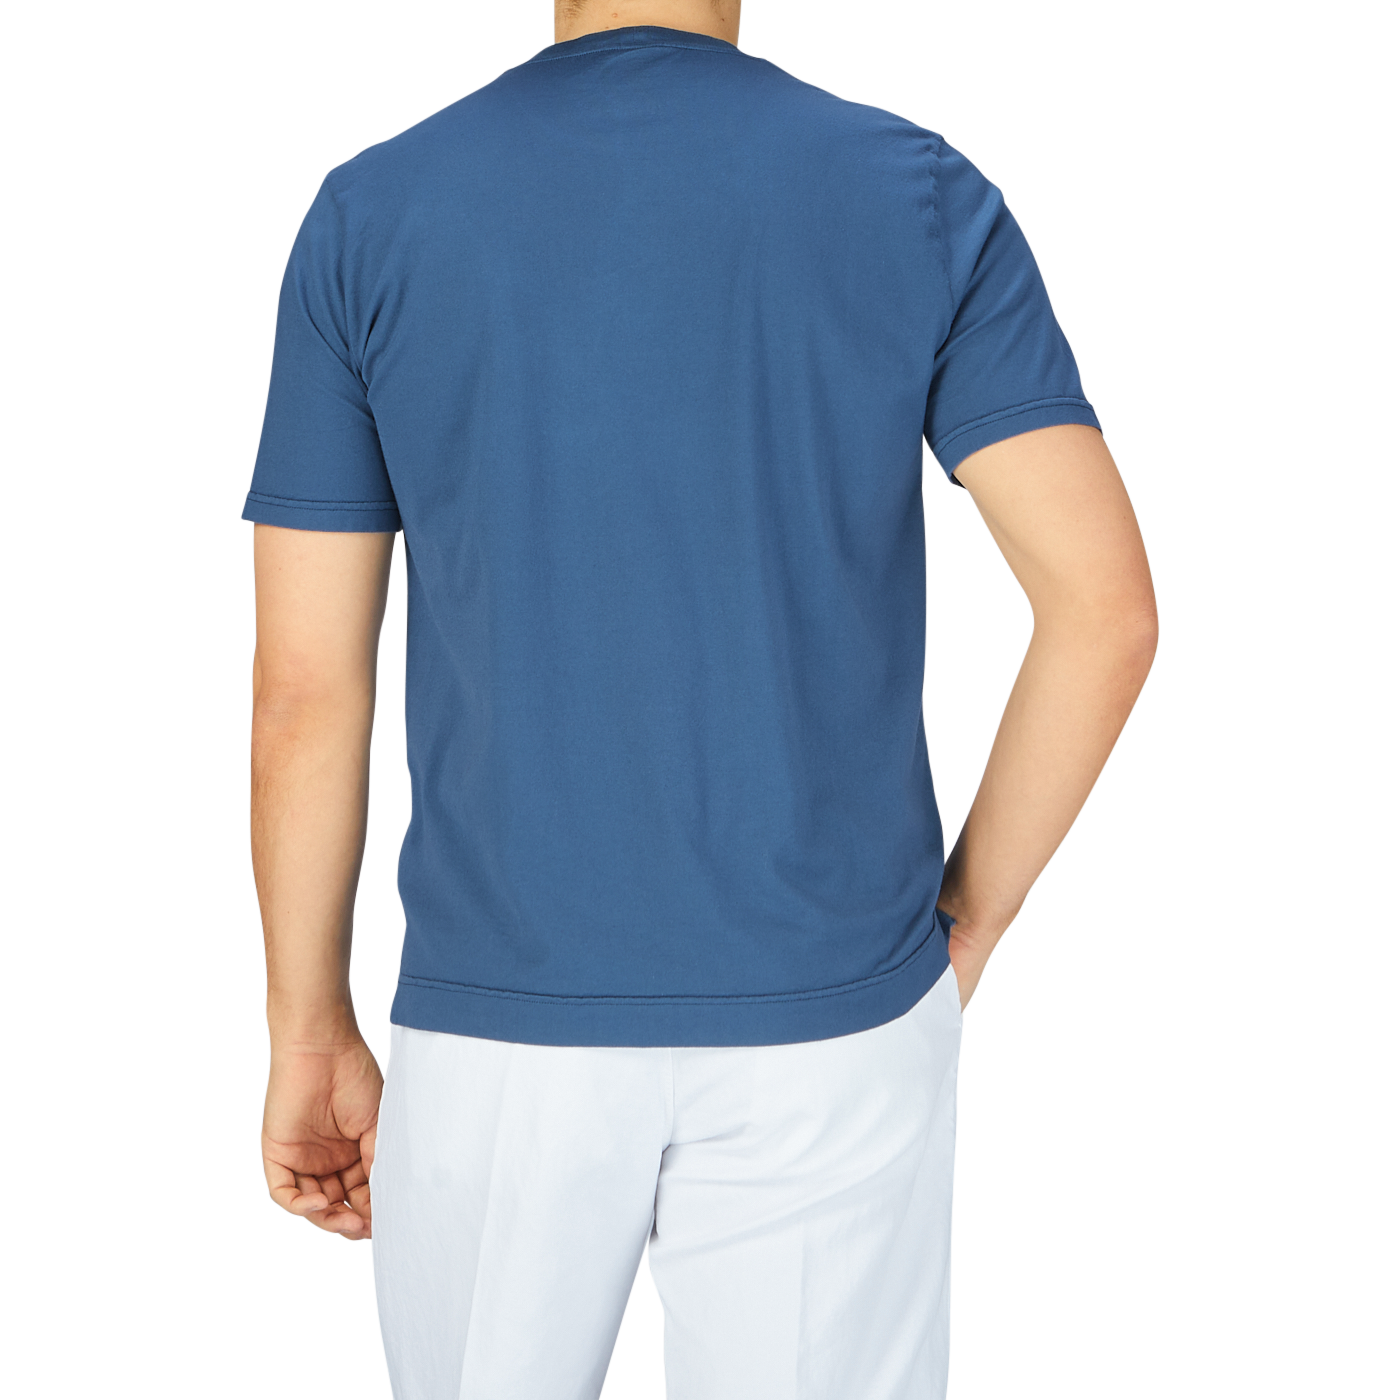 The back view of a man wearing a Fedeli Indigo Blue Organic Cotton T-Shirt.